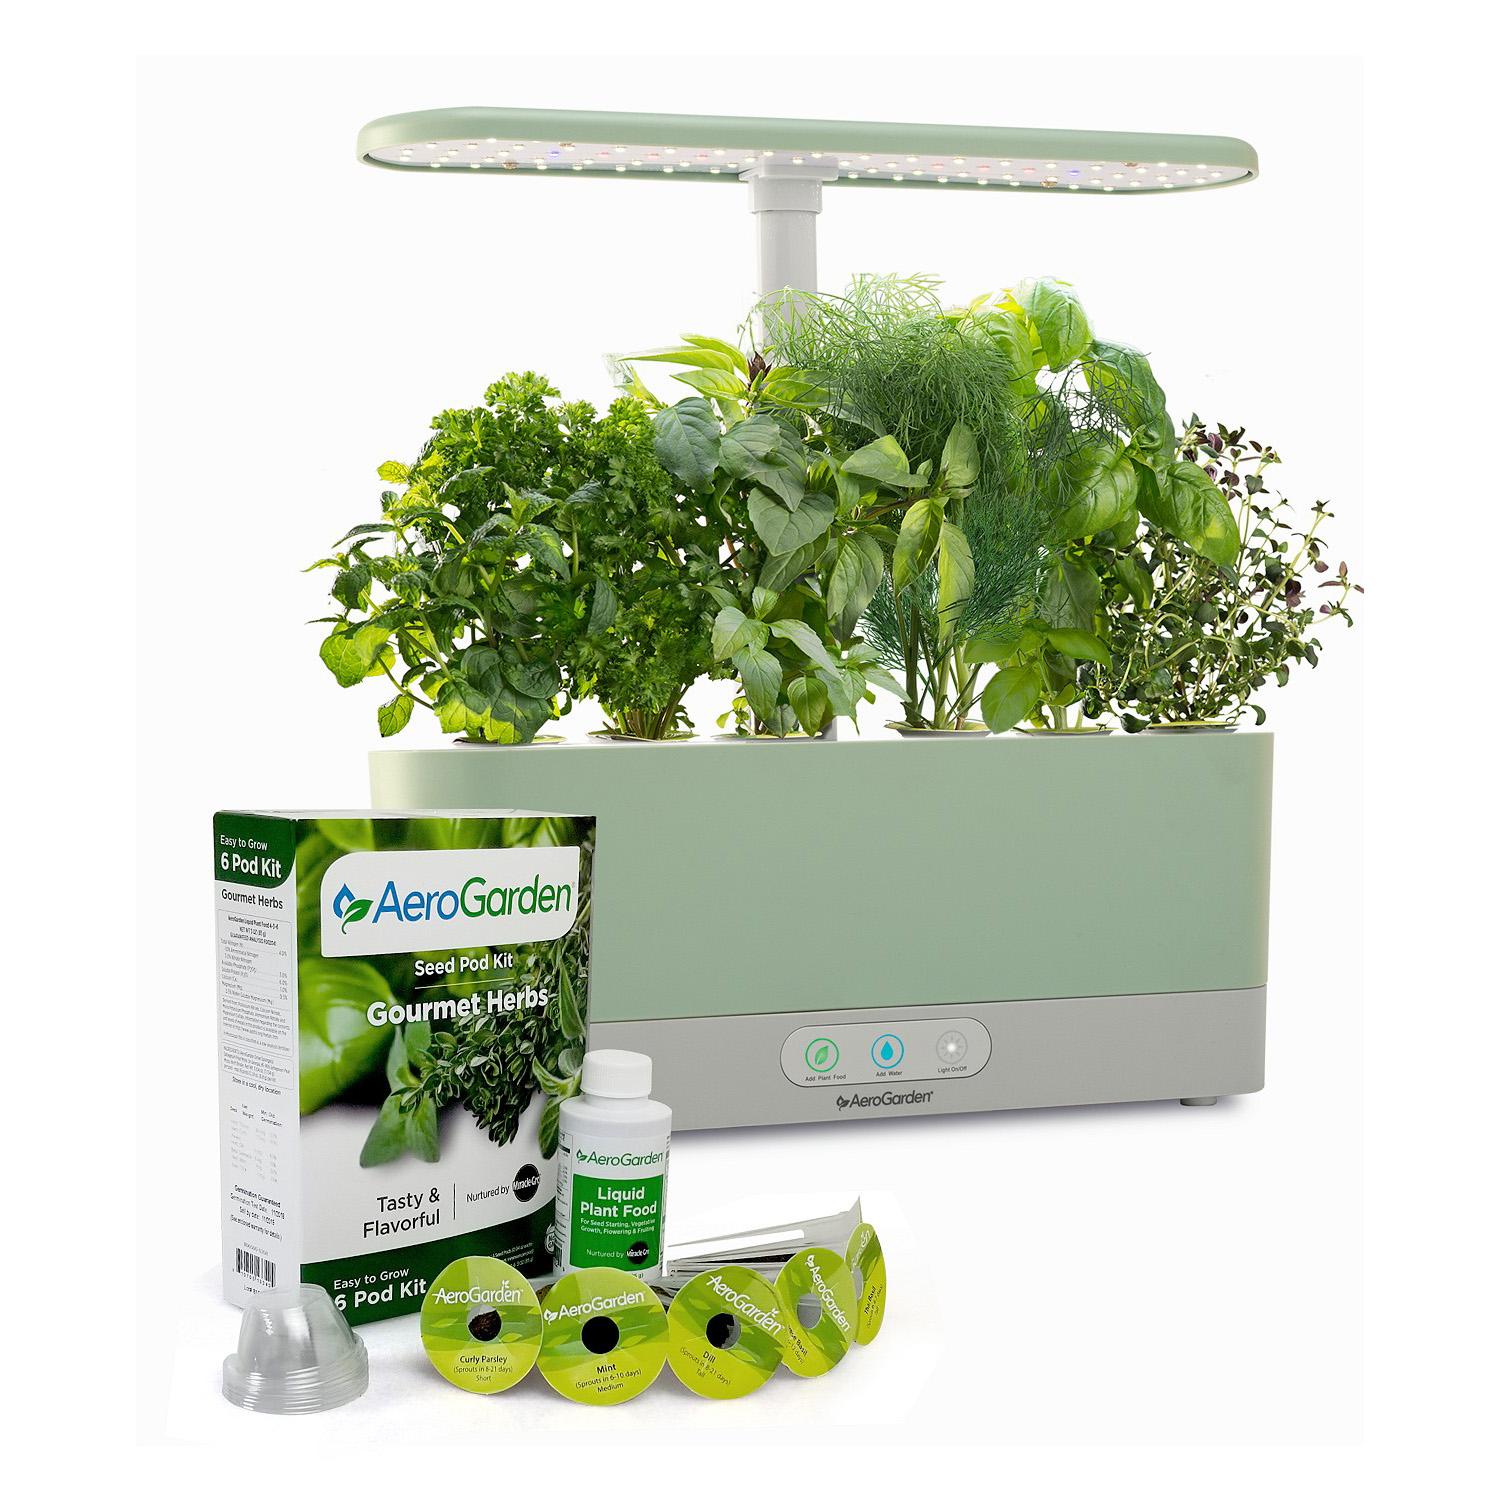 AeroGarden Harvest Slim with Gourmet Herbs Seed Pod Kit for $63.99 Shipped